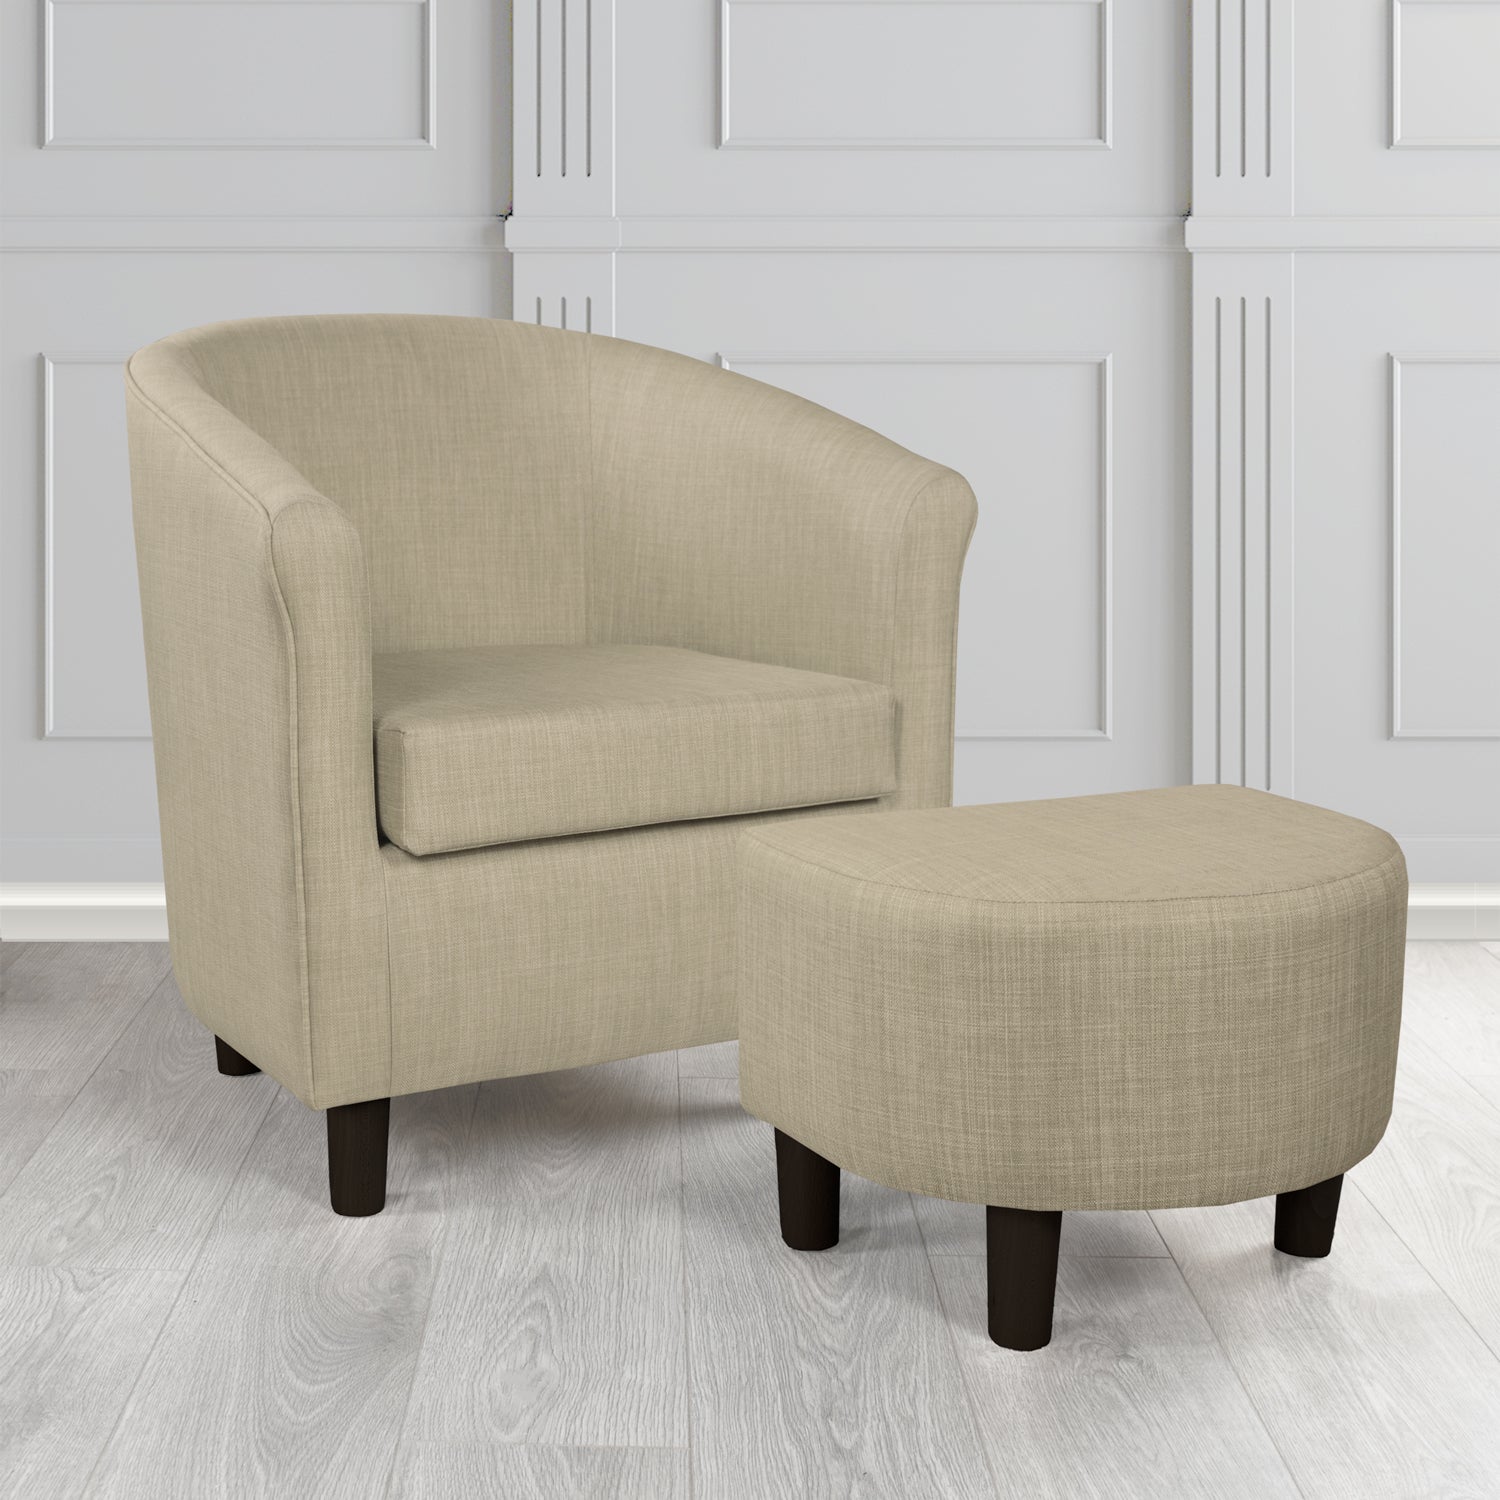 Tuscany Charles Fudge Linen Plain Fabric Tub Chair with Dee Footstool Set - The Tub Chair Shop